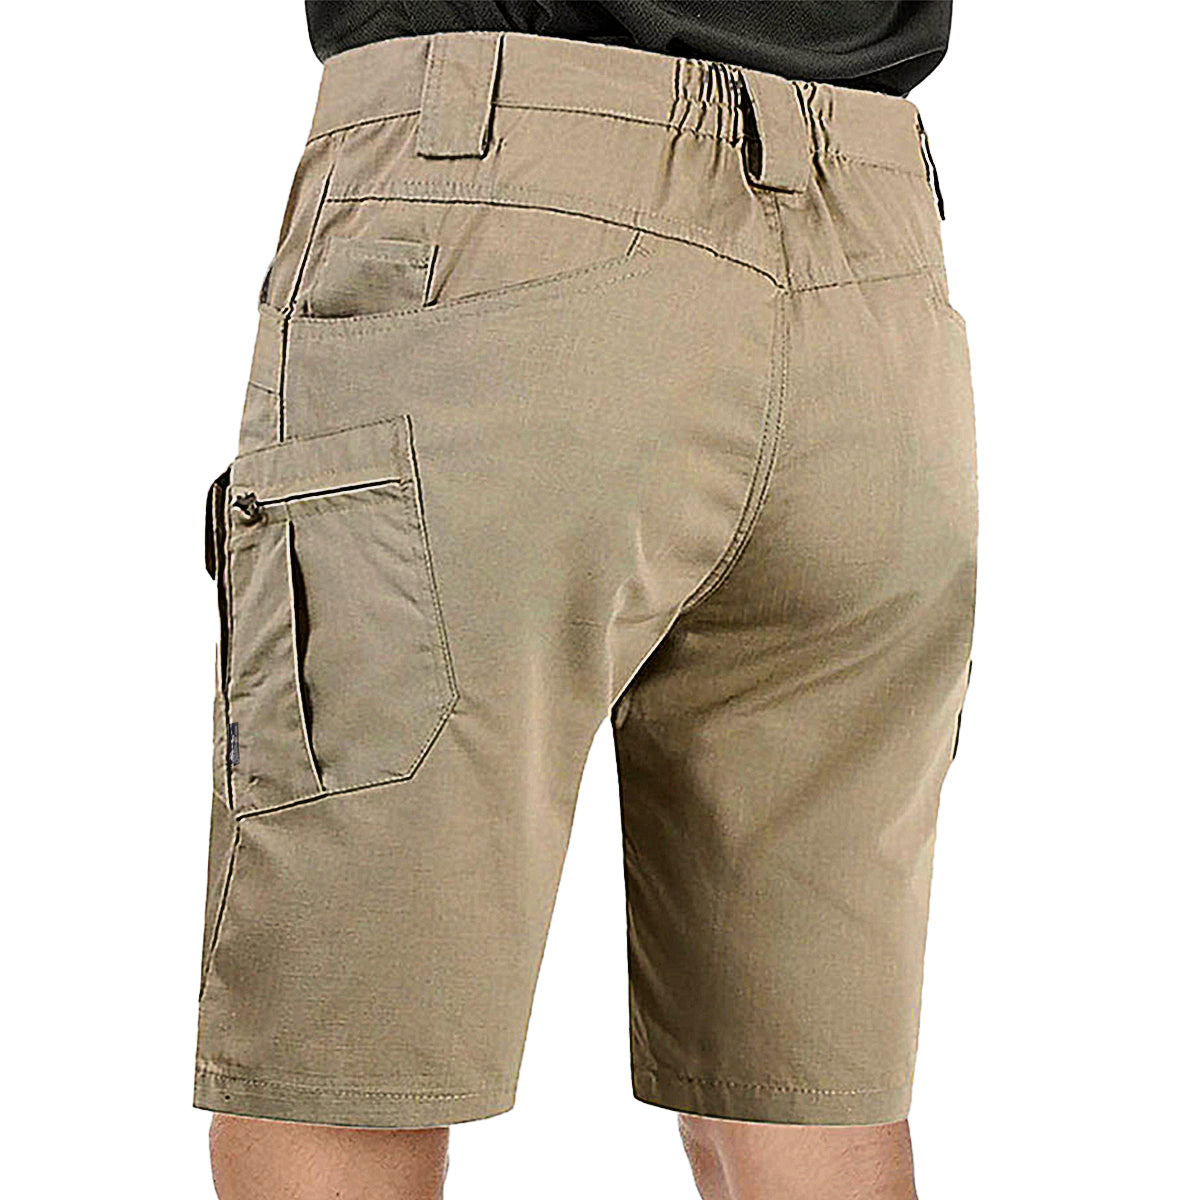 Men's Outdoor Tactical Multifunctional Shorts With Buckle Belt